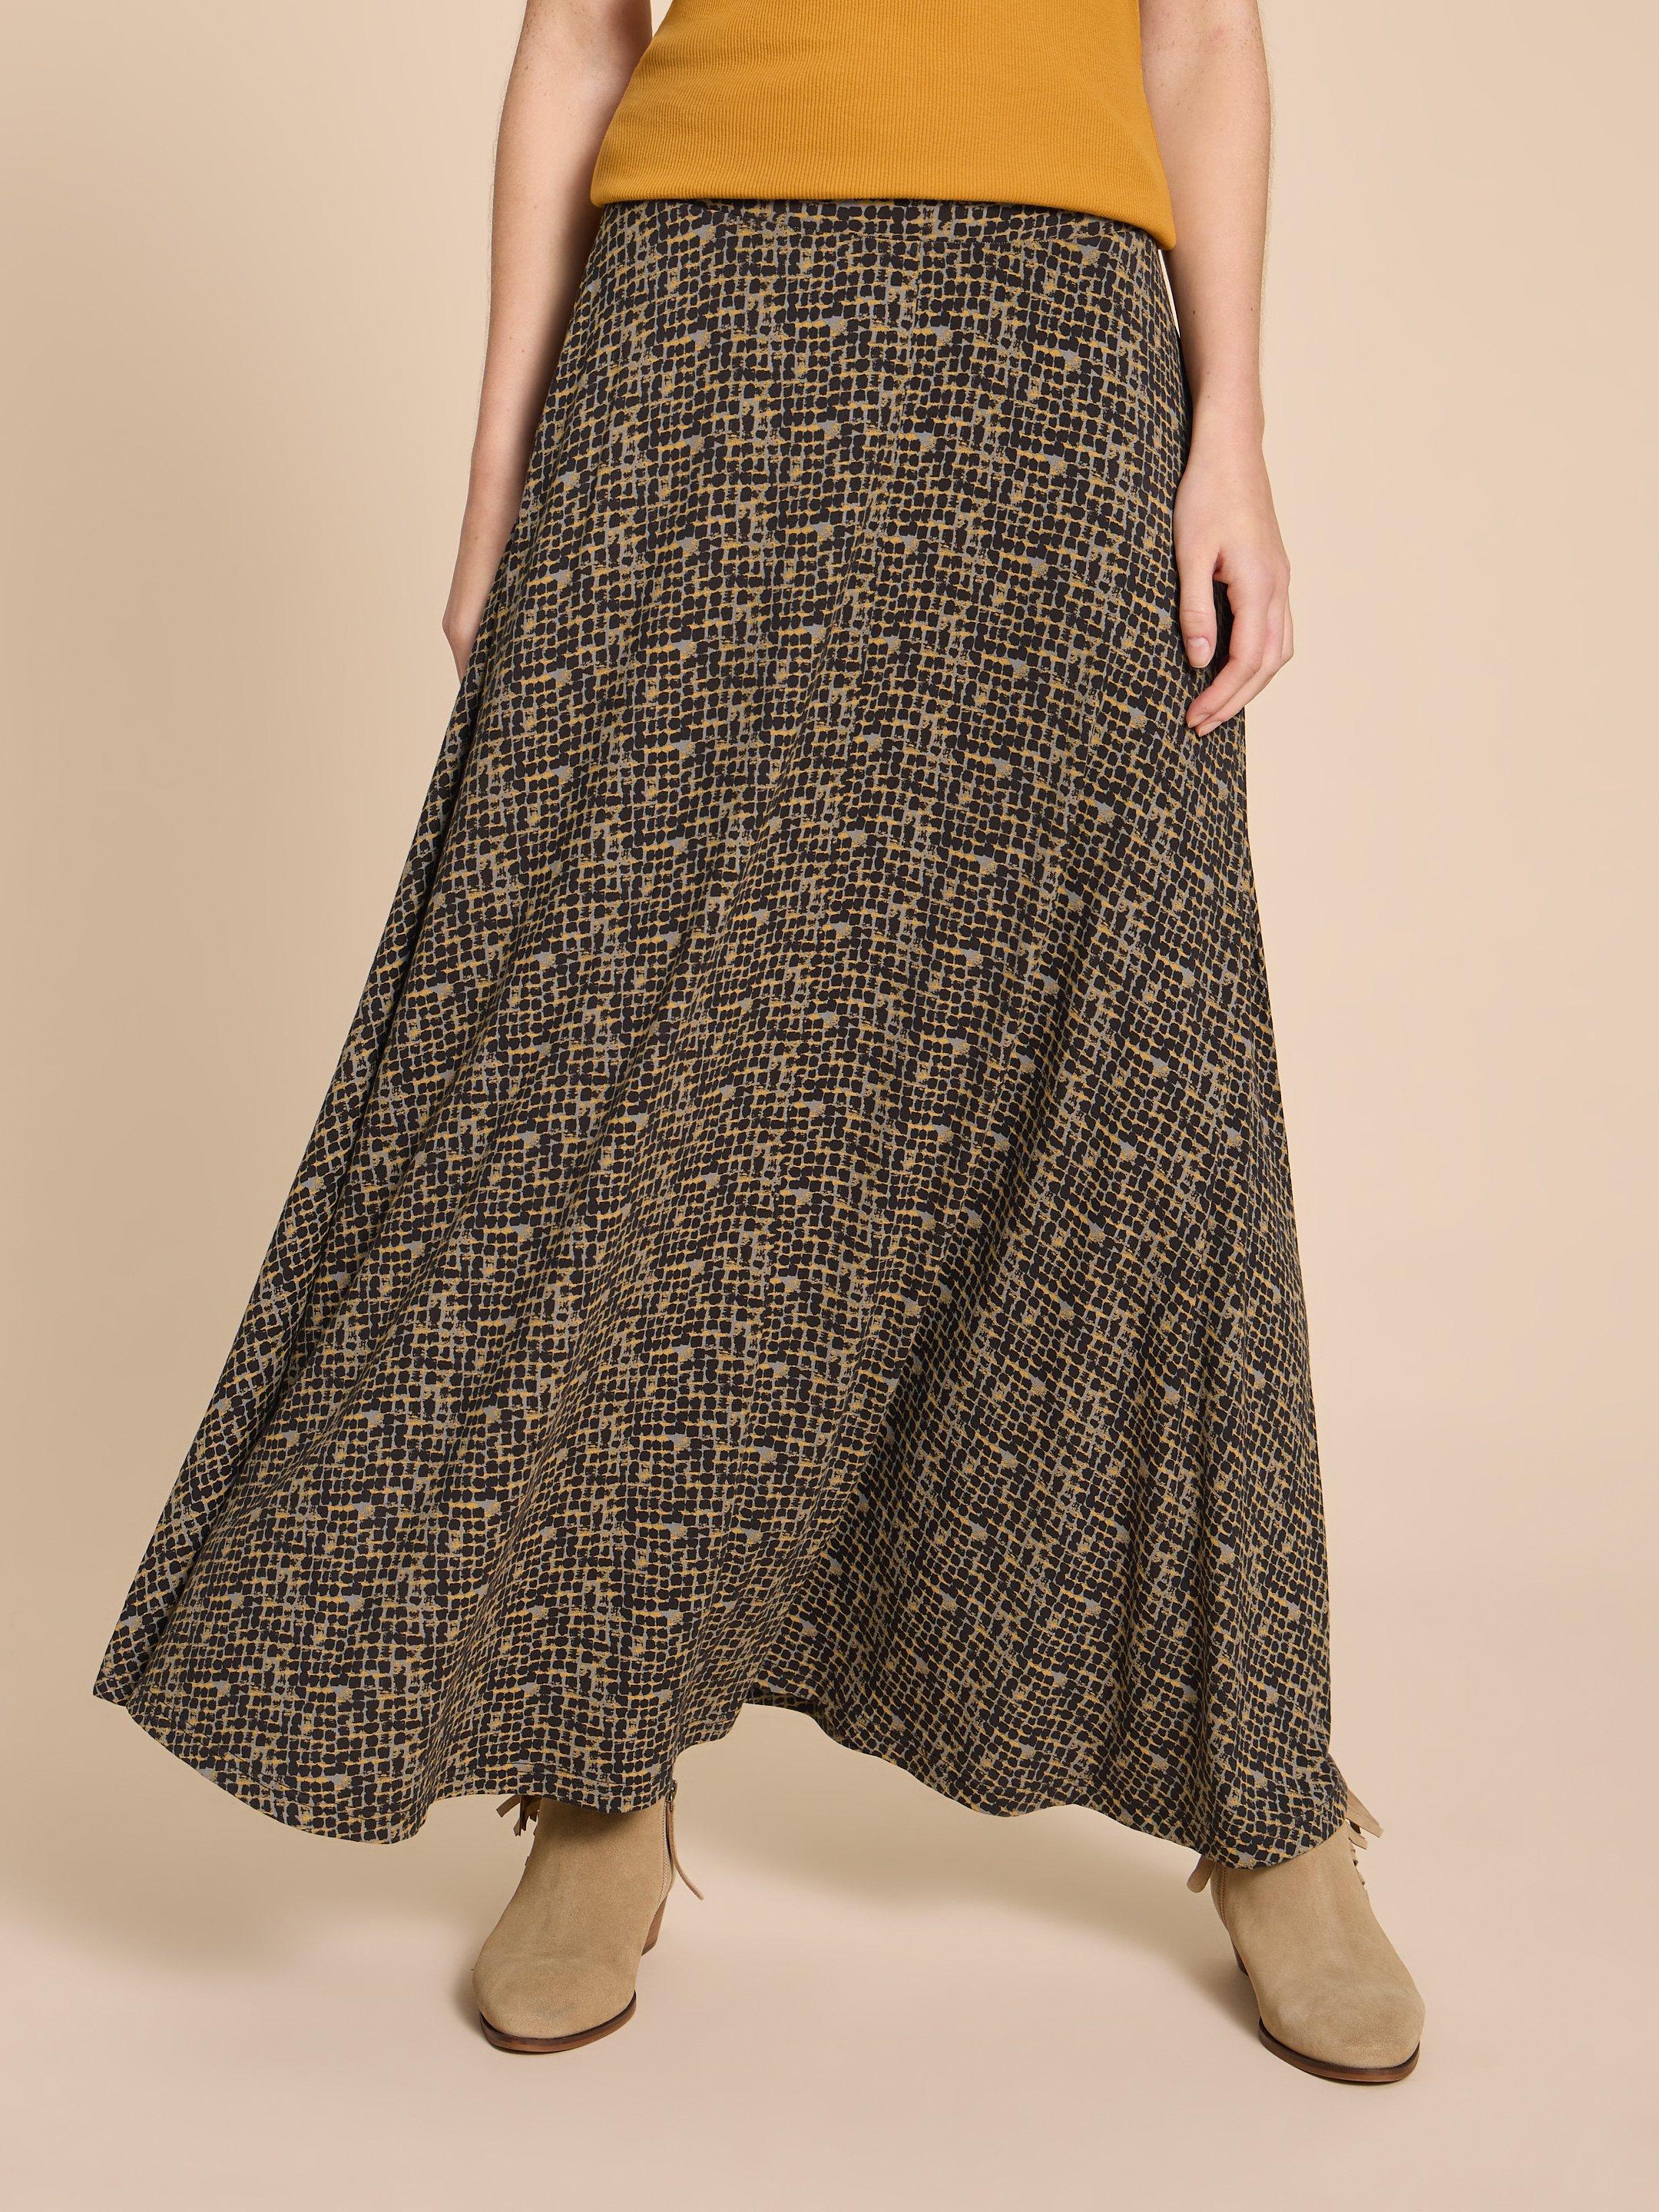 Jada Eco Vero Skirt in BLK PR - MODEL DETAIL